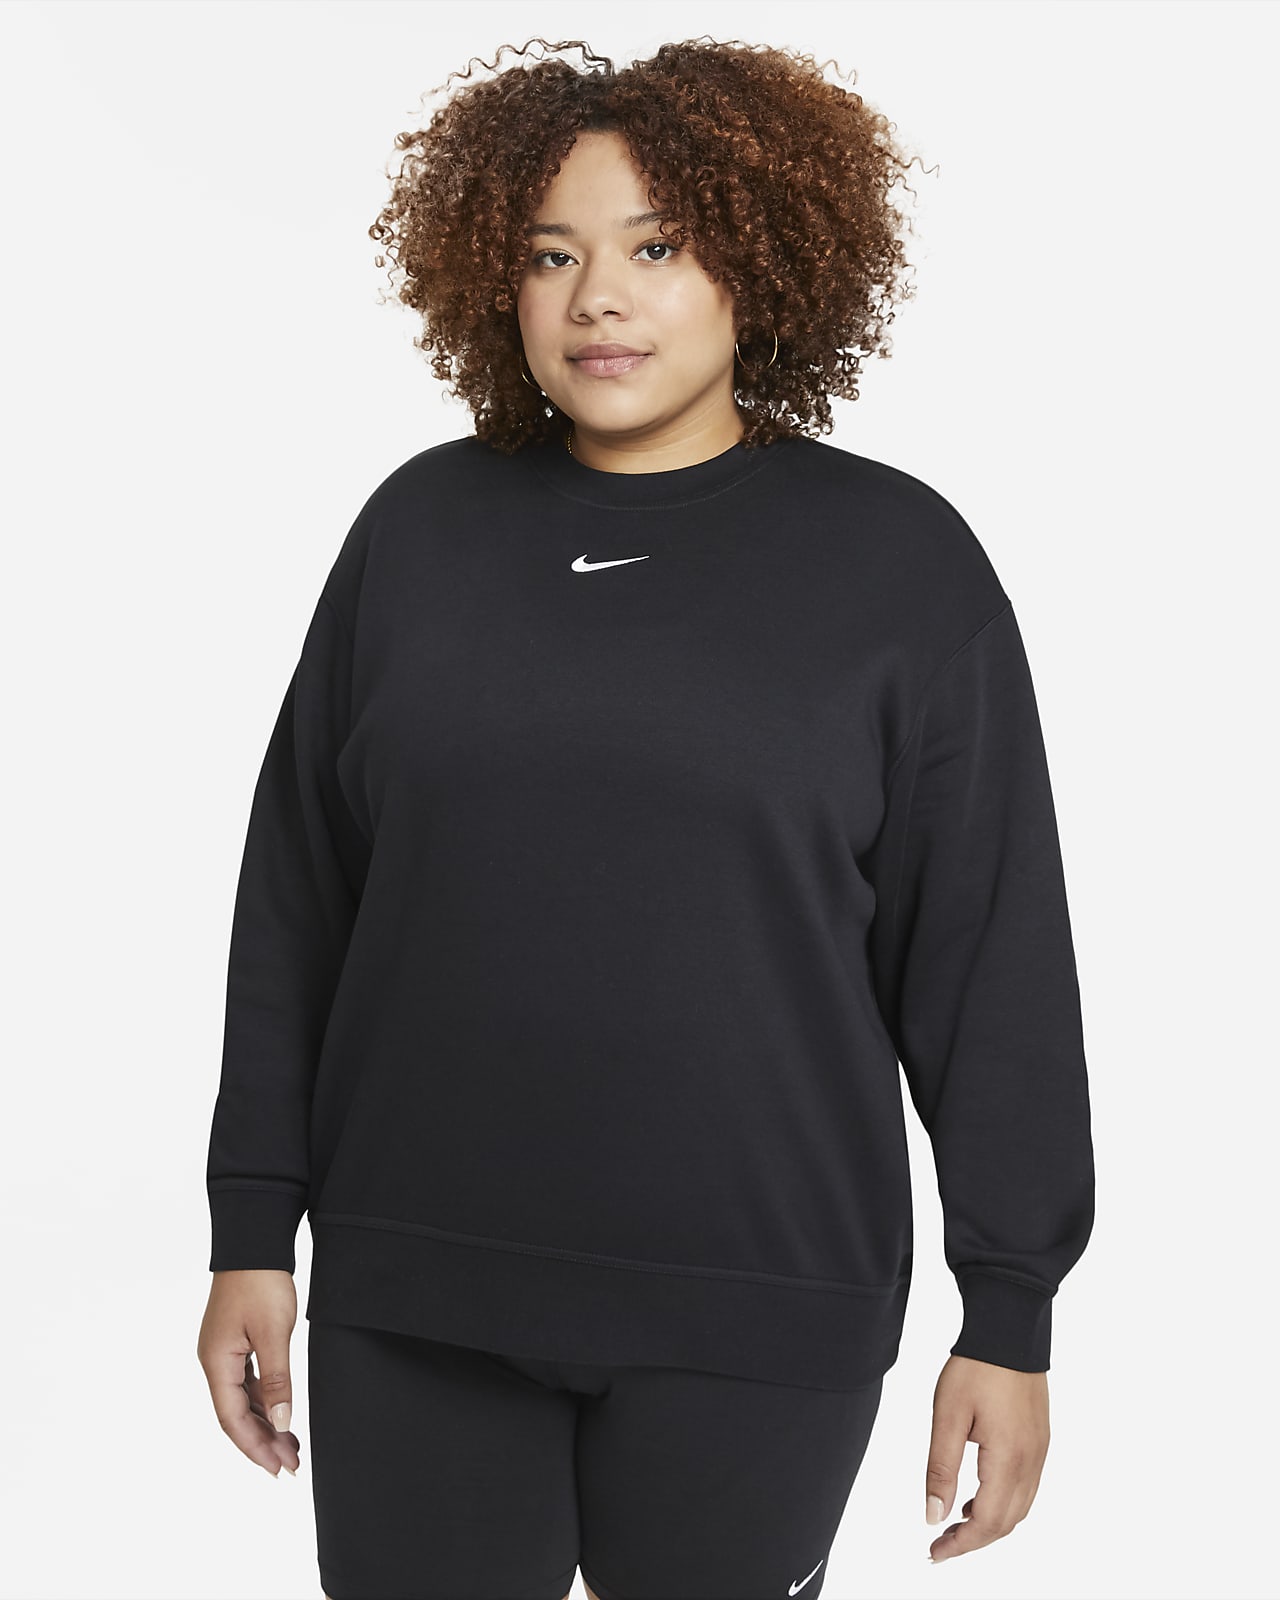 Nike Sportswear Collection Essentials Women's Fleece Crew (Plus Size)